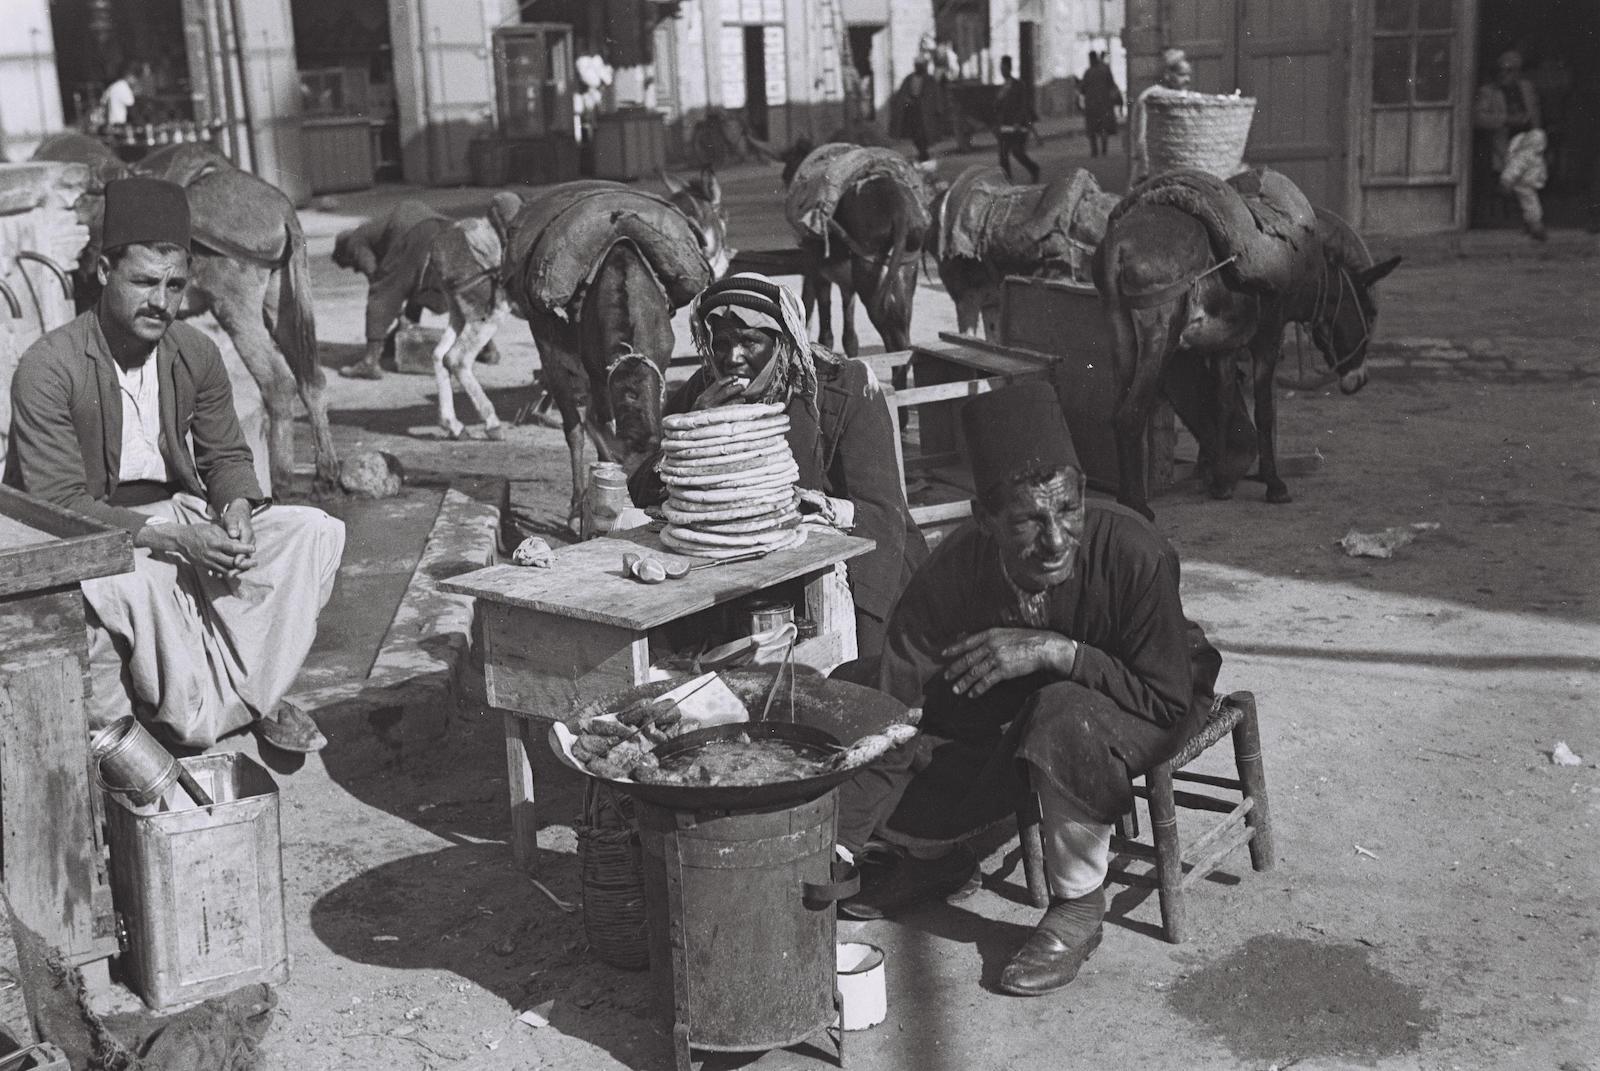 A falafel vender in the Old City of Jerusalem, Palestine, c. 1935. Zoltan Kluger. National Photo Collection of Israel. Public Domain.